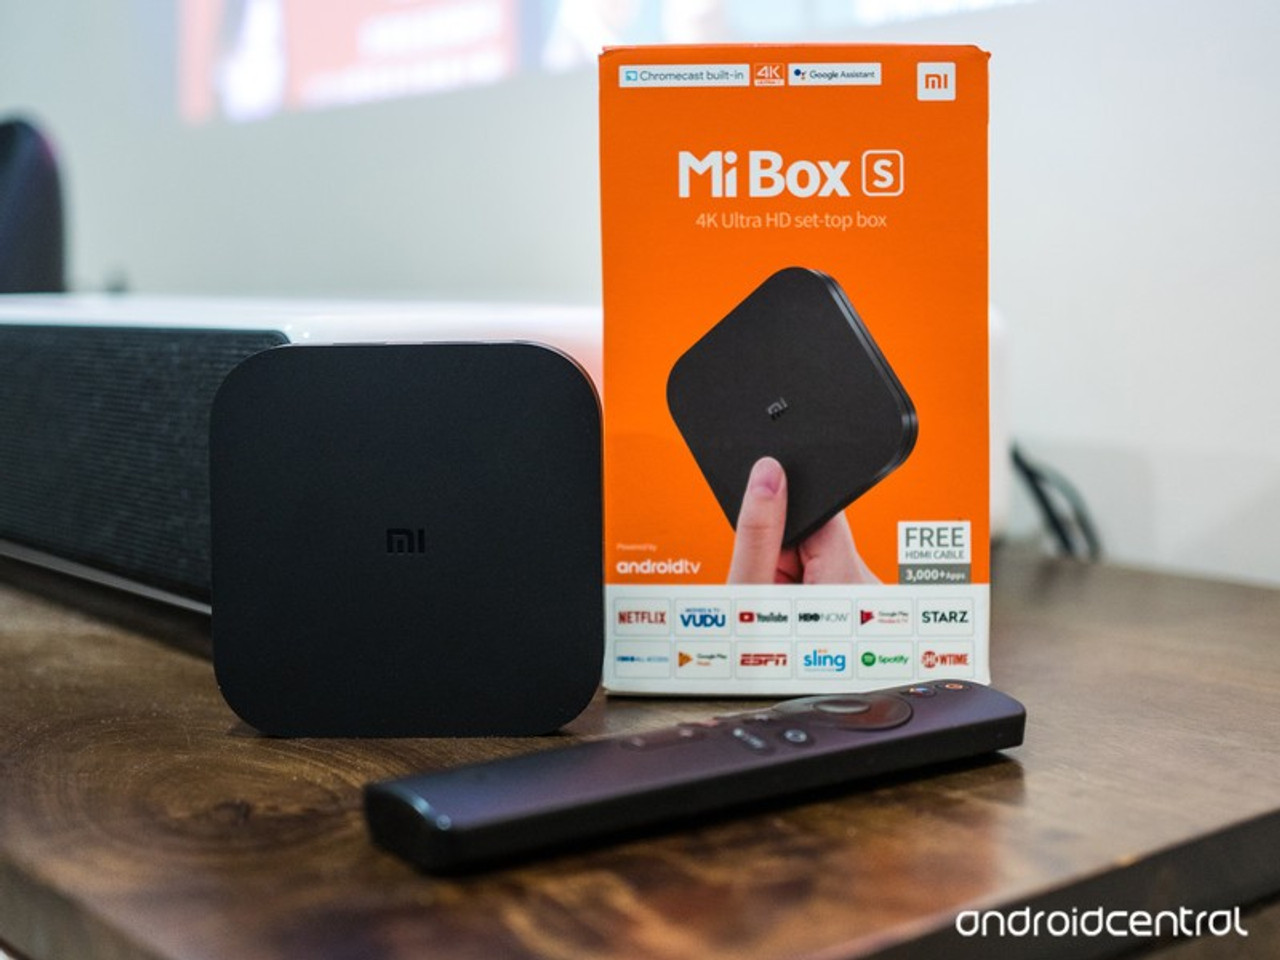 Xiaomi Mi Box S 8 GB Media Player 4K Ultra HD Android Tv Streaming Wifi